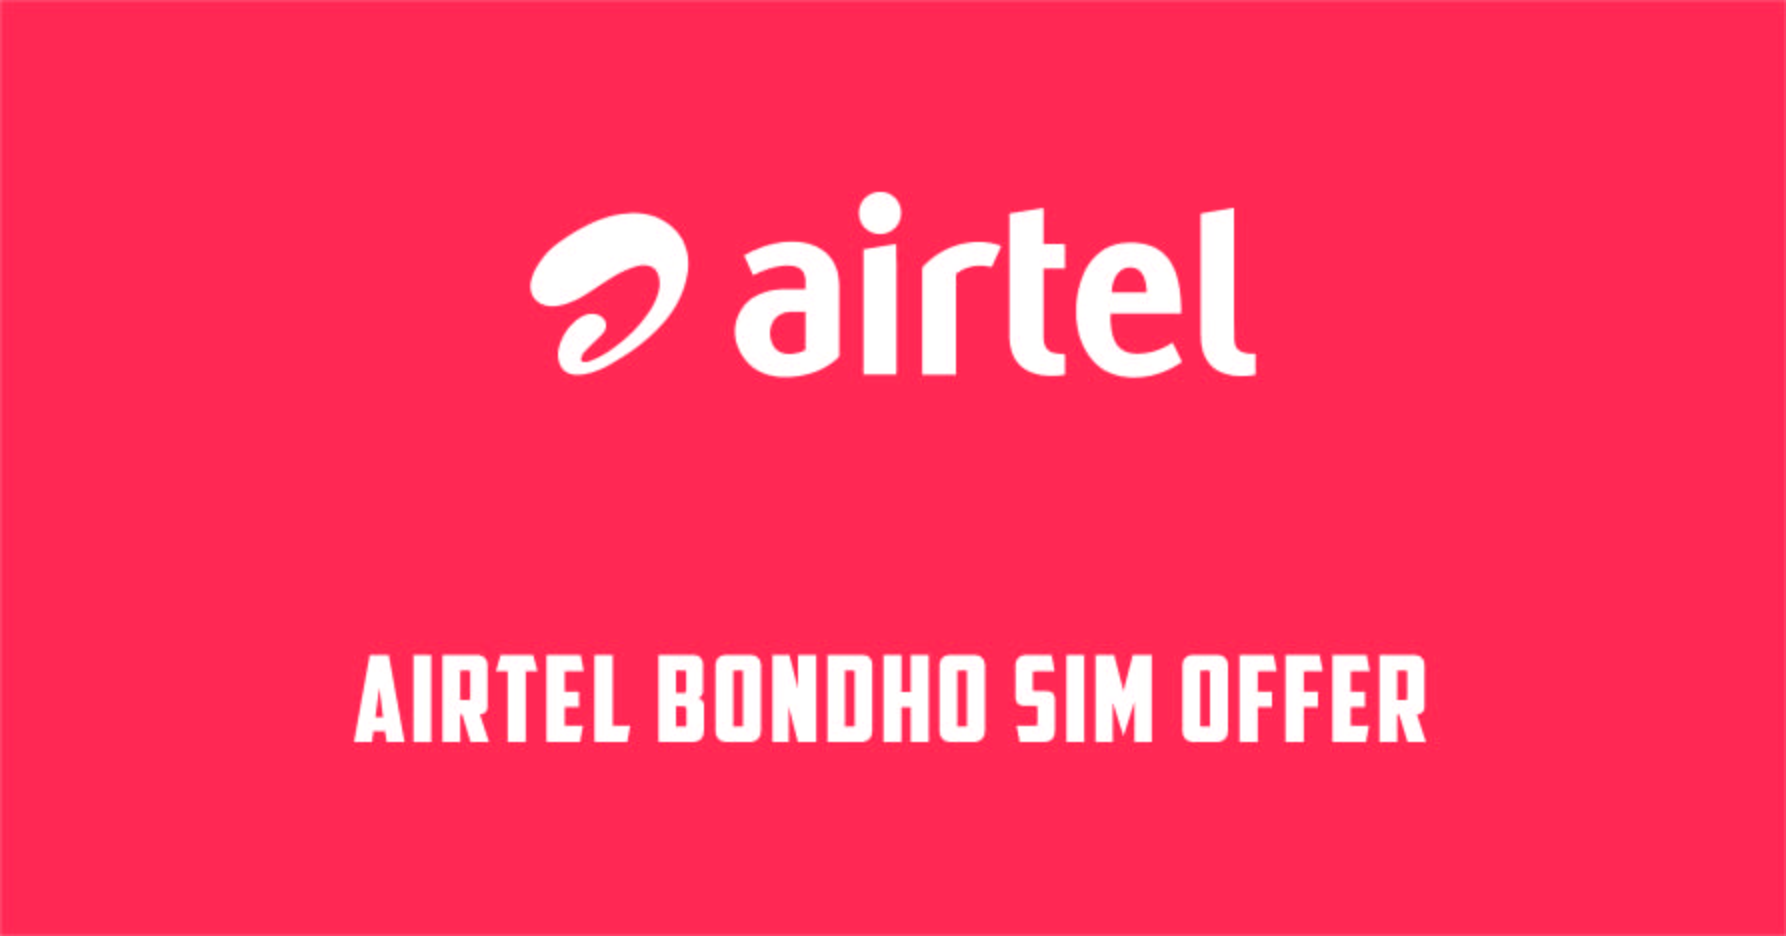 Airtel Bondho SIM offer